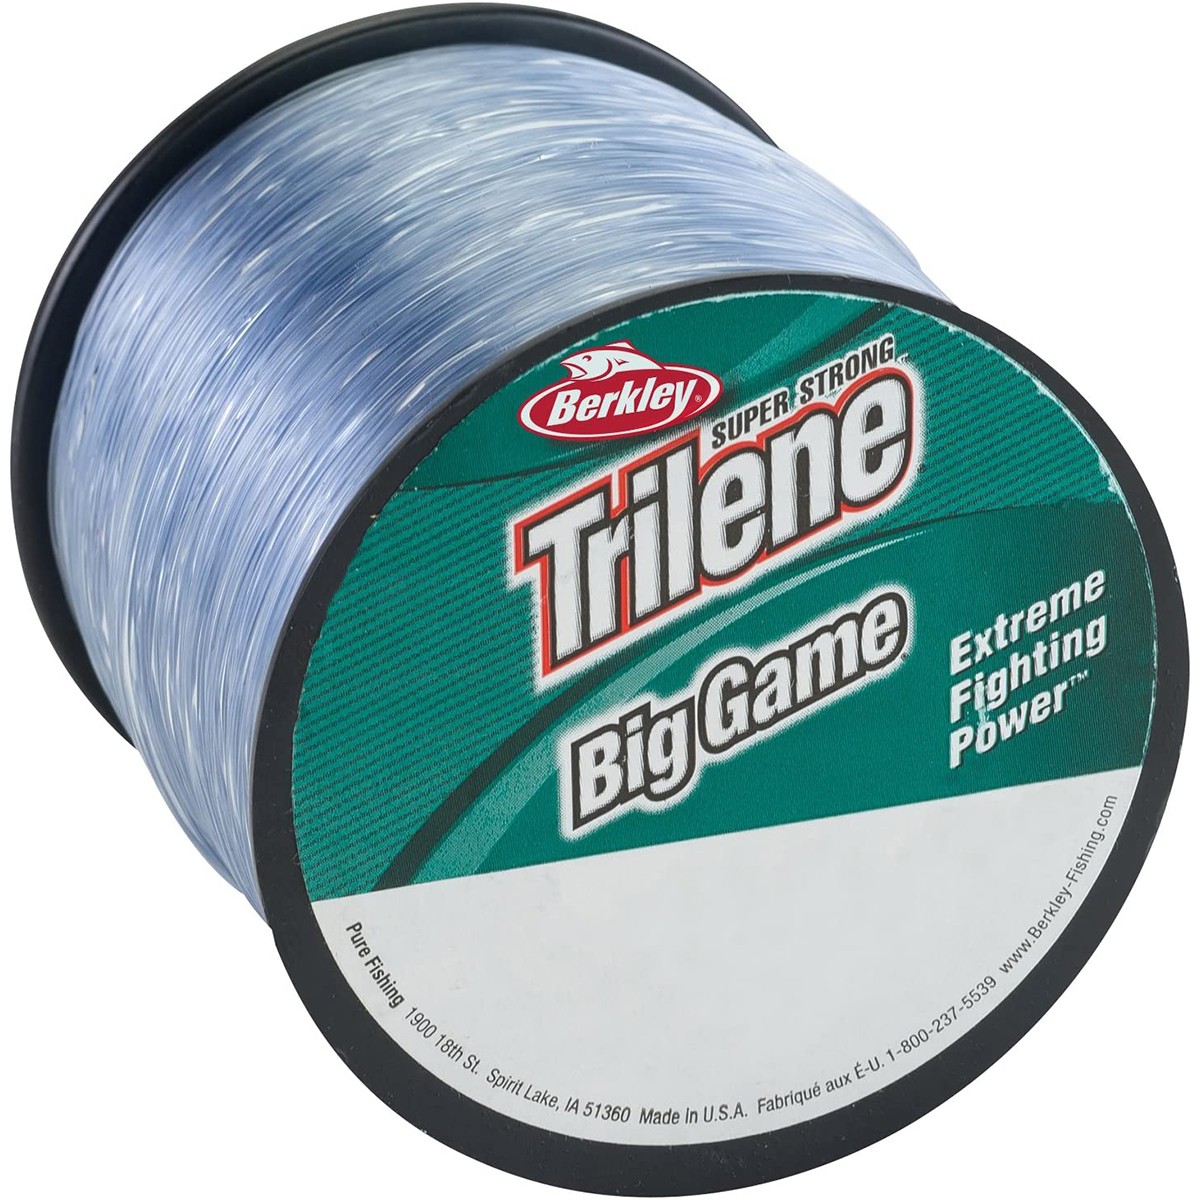 Berkley Trilene Big Game Steel Blue Fishing Line Spool – 20 lb